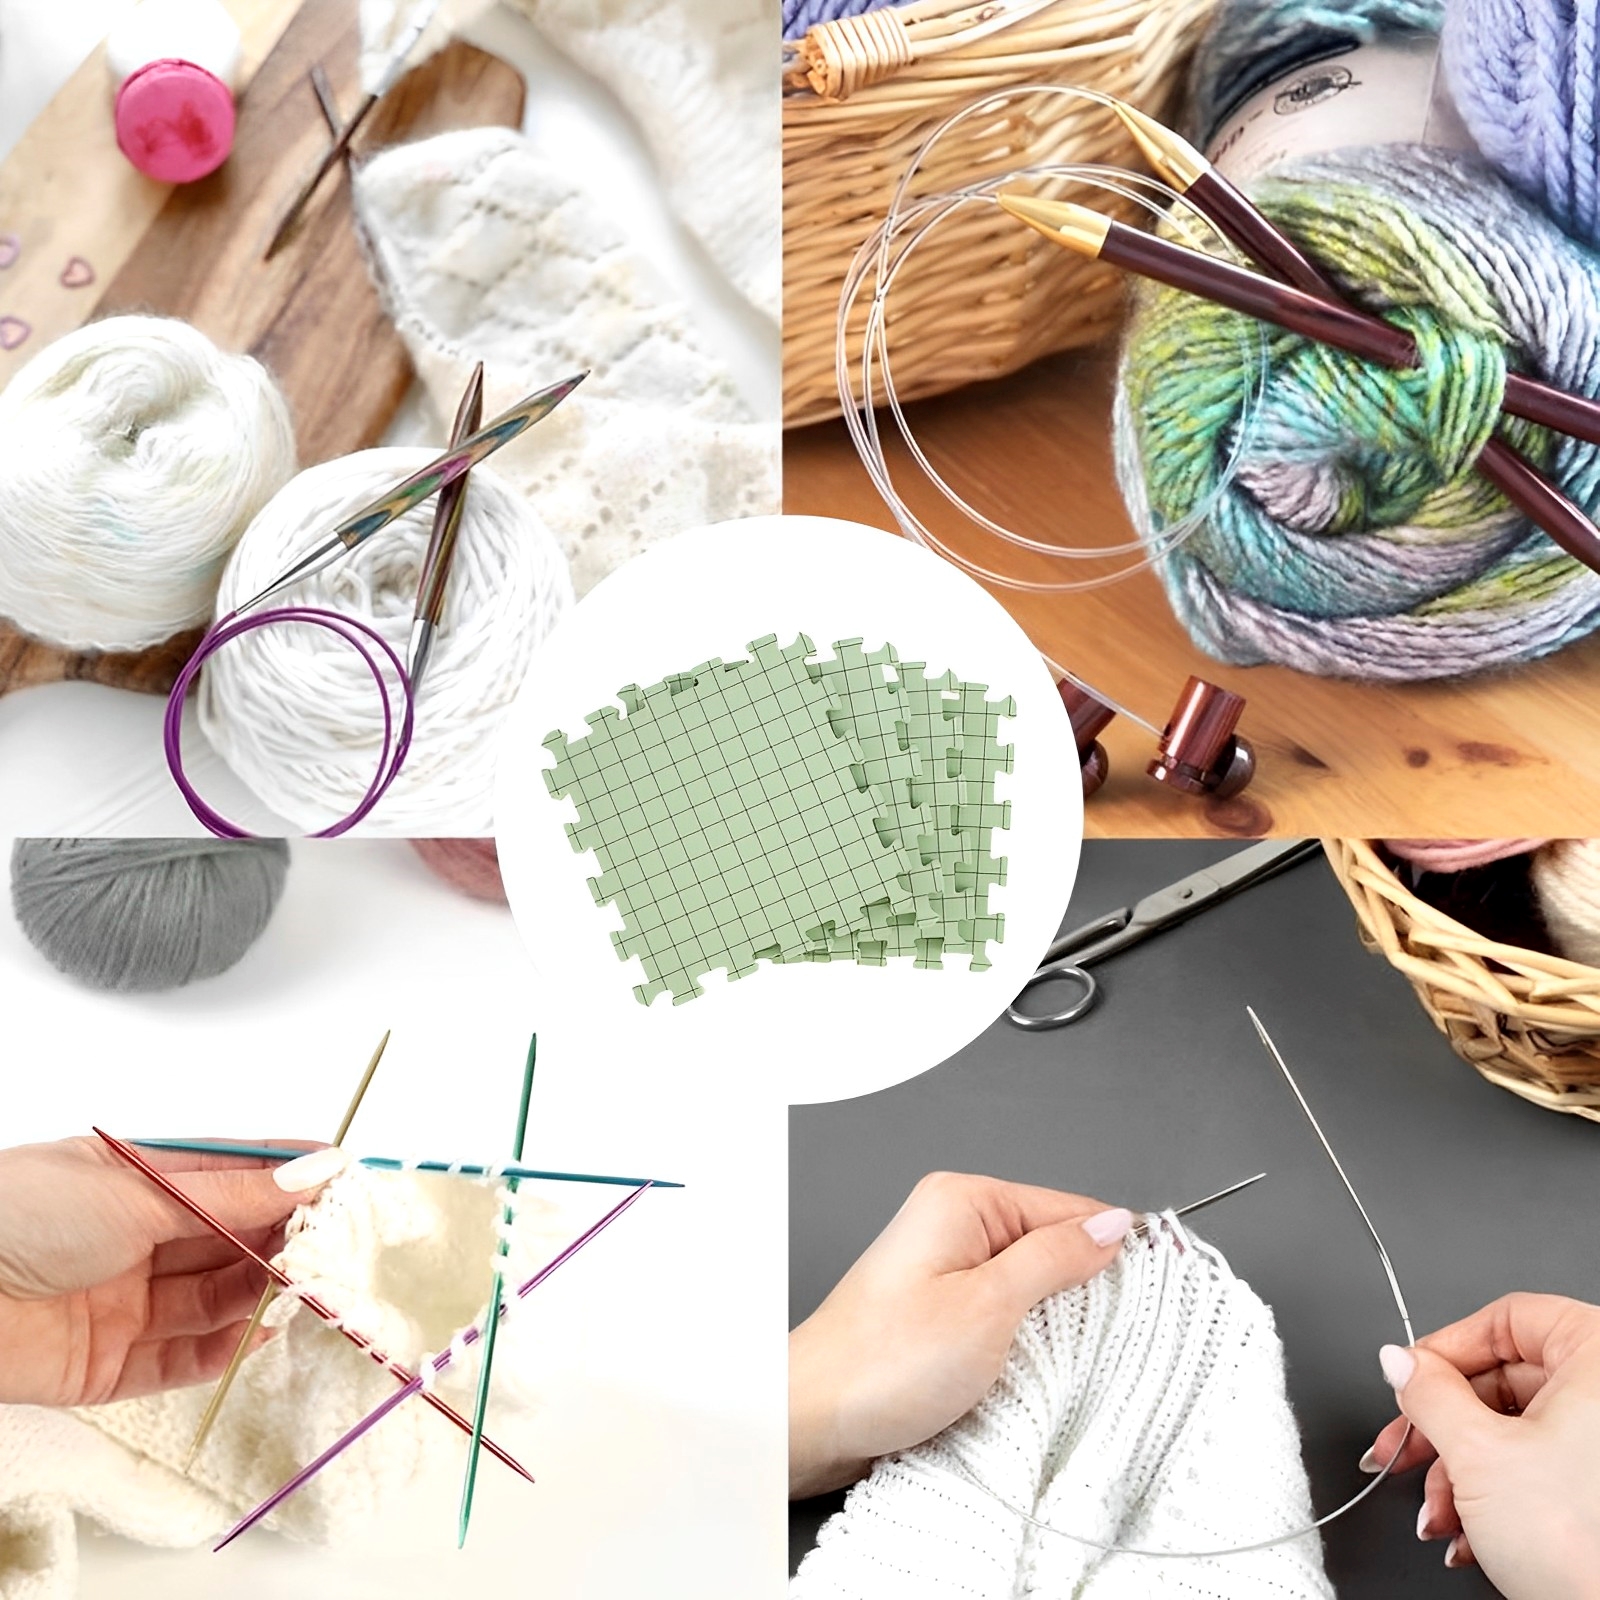  Blocking Mats for Knitting and Crochet, Extra Thick Blocking  Boards with Grids, Foam Blocking Board, Interlocking Foam Blocks for  Needlework or Crochet Beginner Knitting Lover DIY Gift (8 Pack)